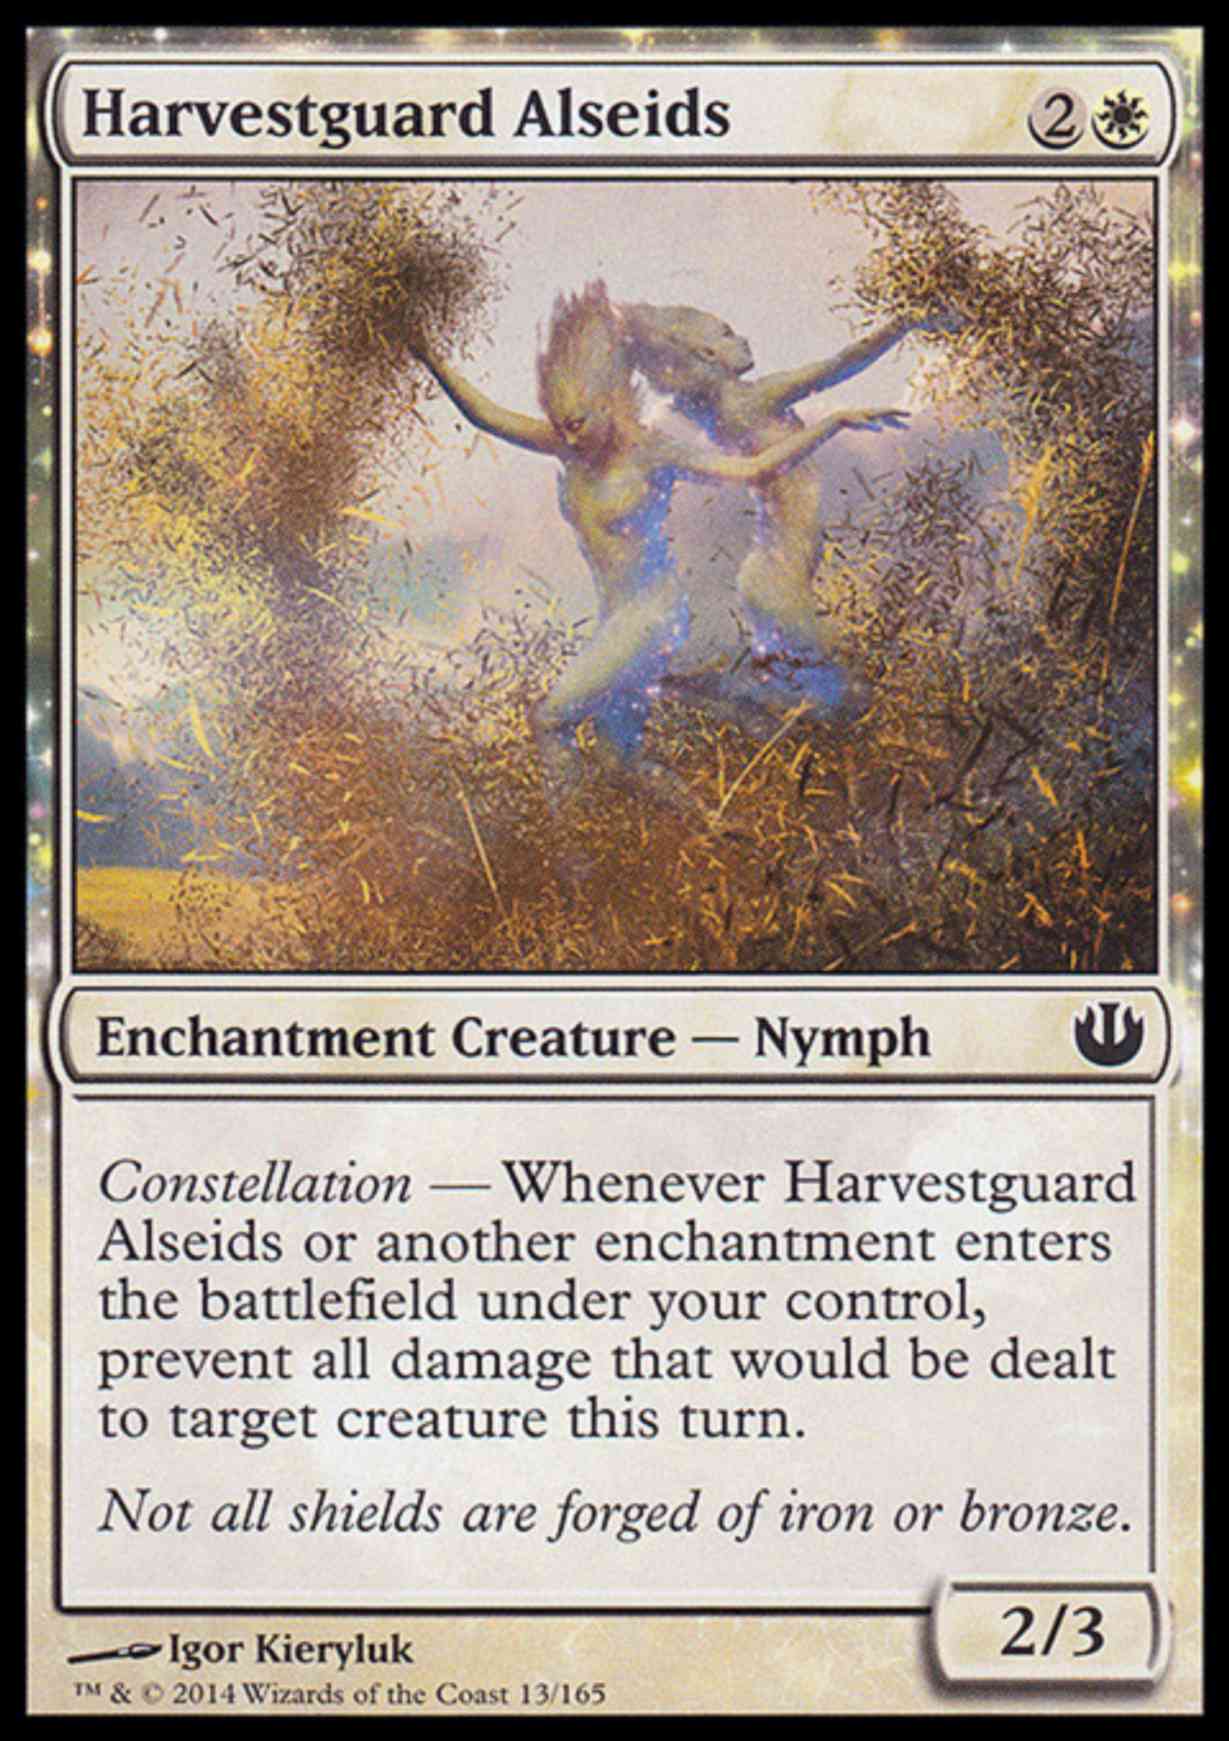 Harvestguard Alseids magic card front